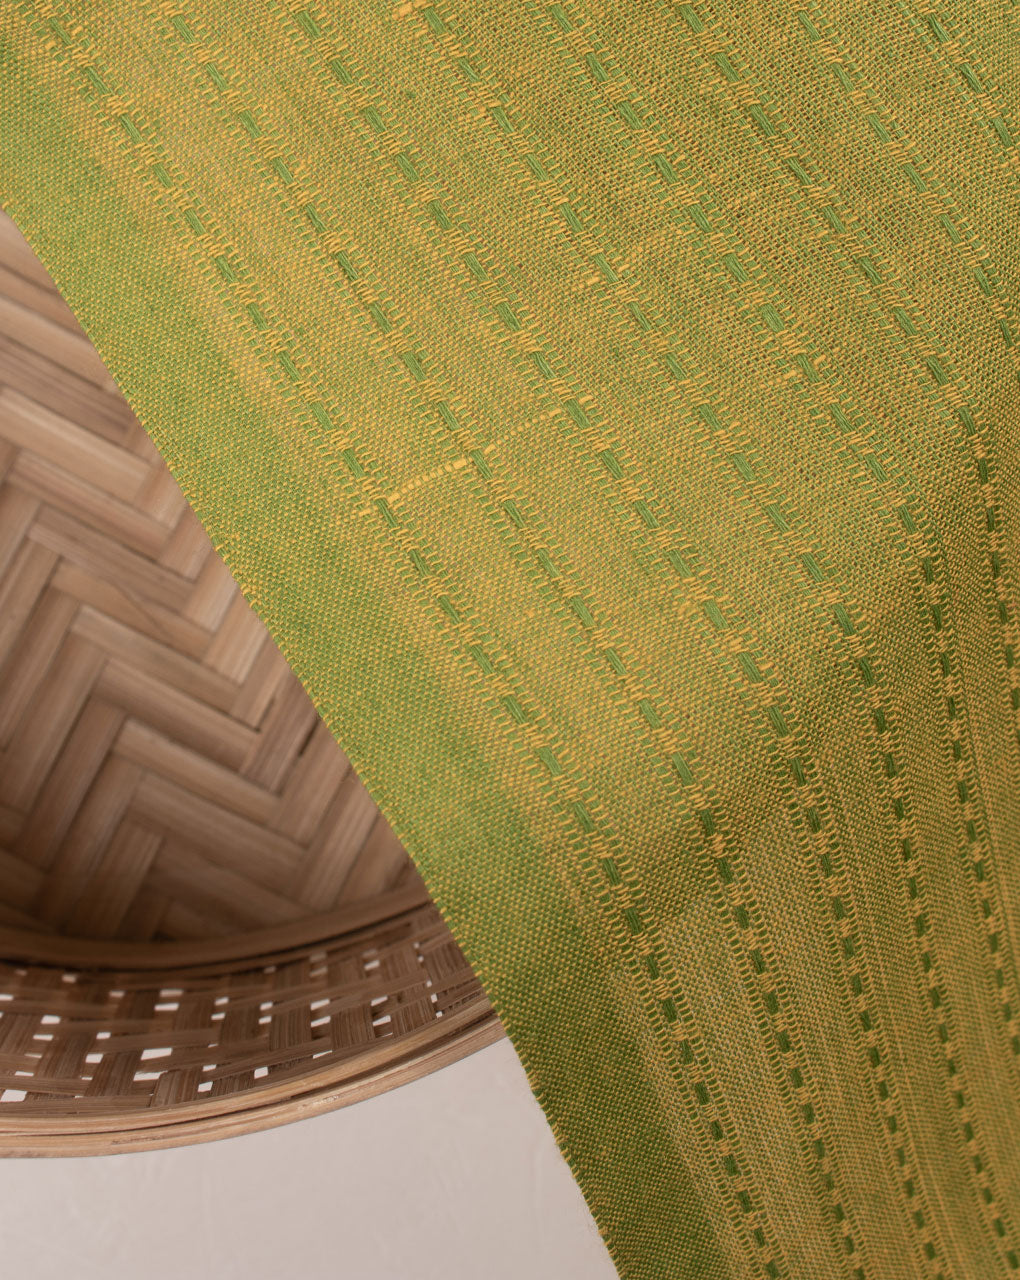 Kantha Loom Textured Cotton Fabric - Fabriclore.com